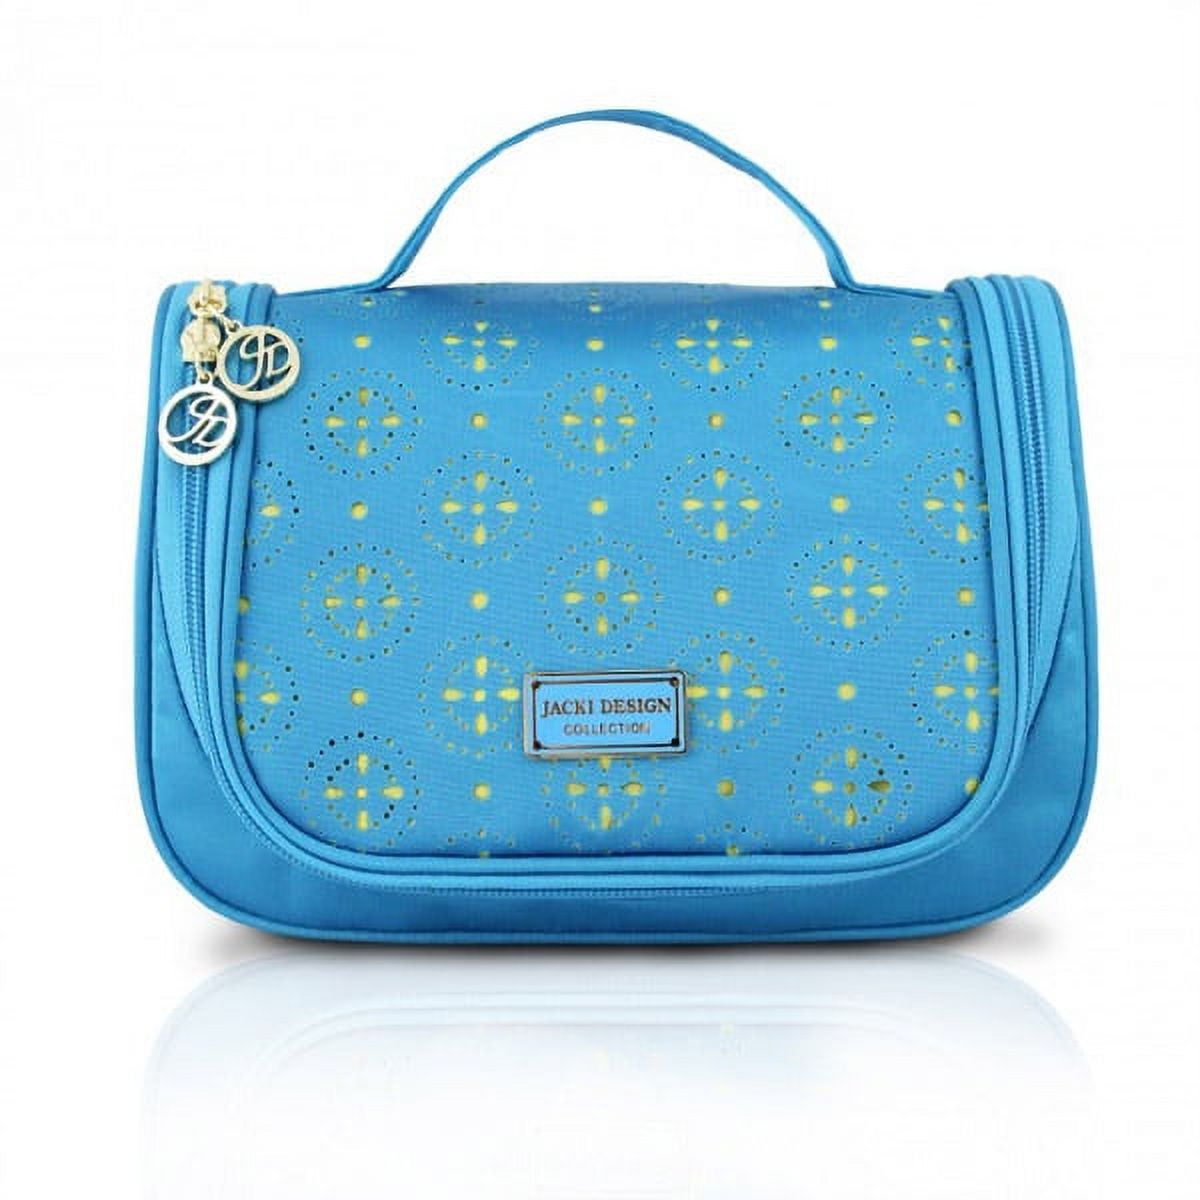 Cosmopolitan Brown Tote Bag Handbag Shoulder Bag | eBay